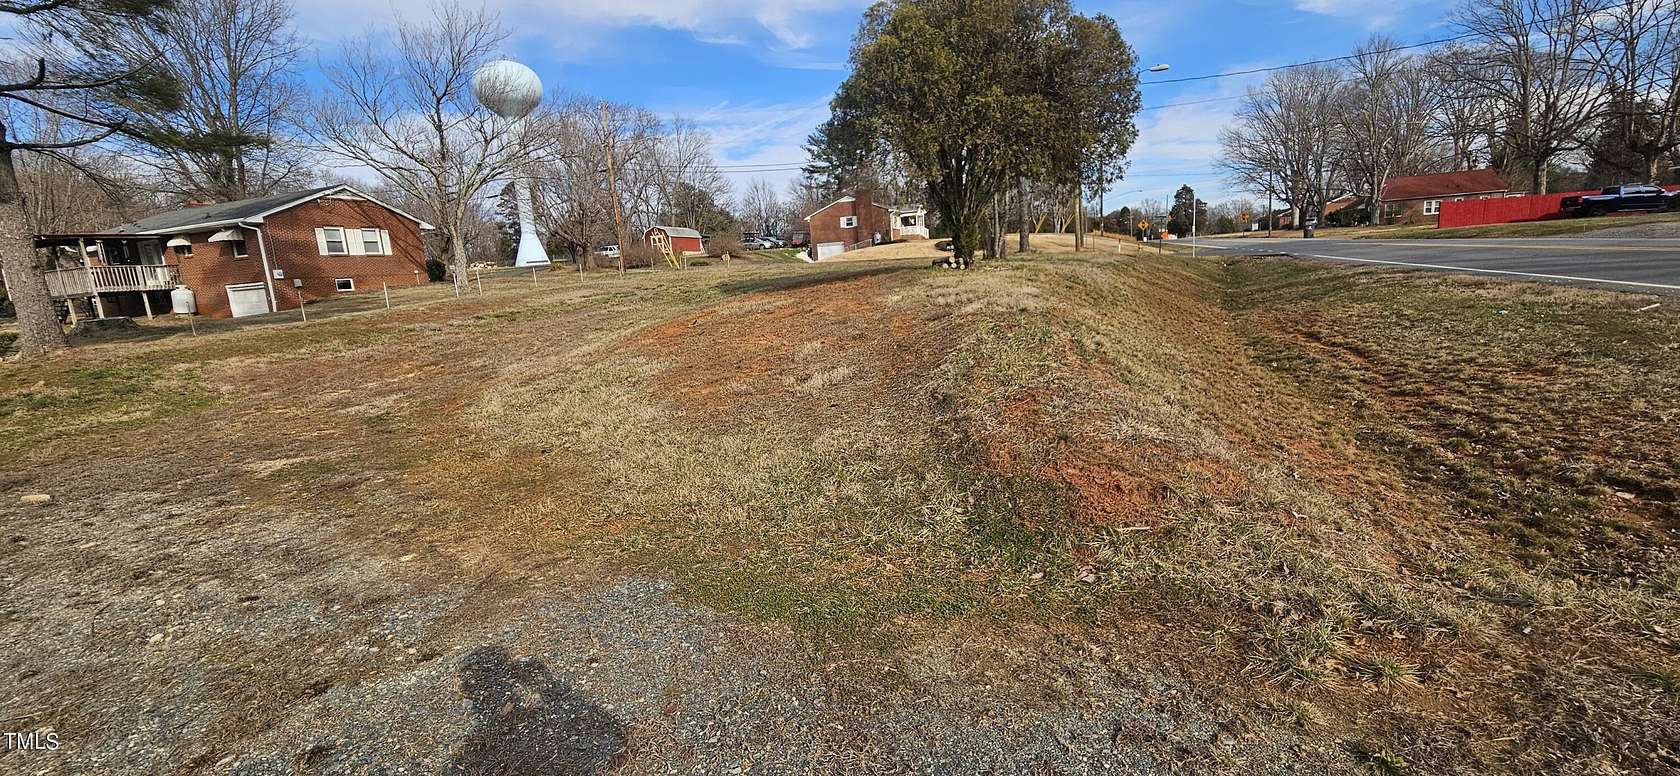 0.26 Acres of Land for Auction in Winston-Salem, North Carolina